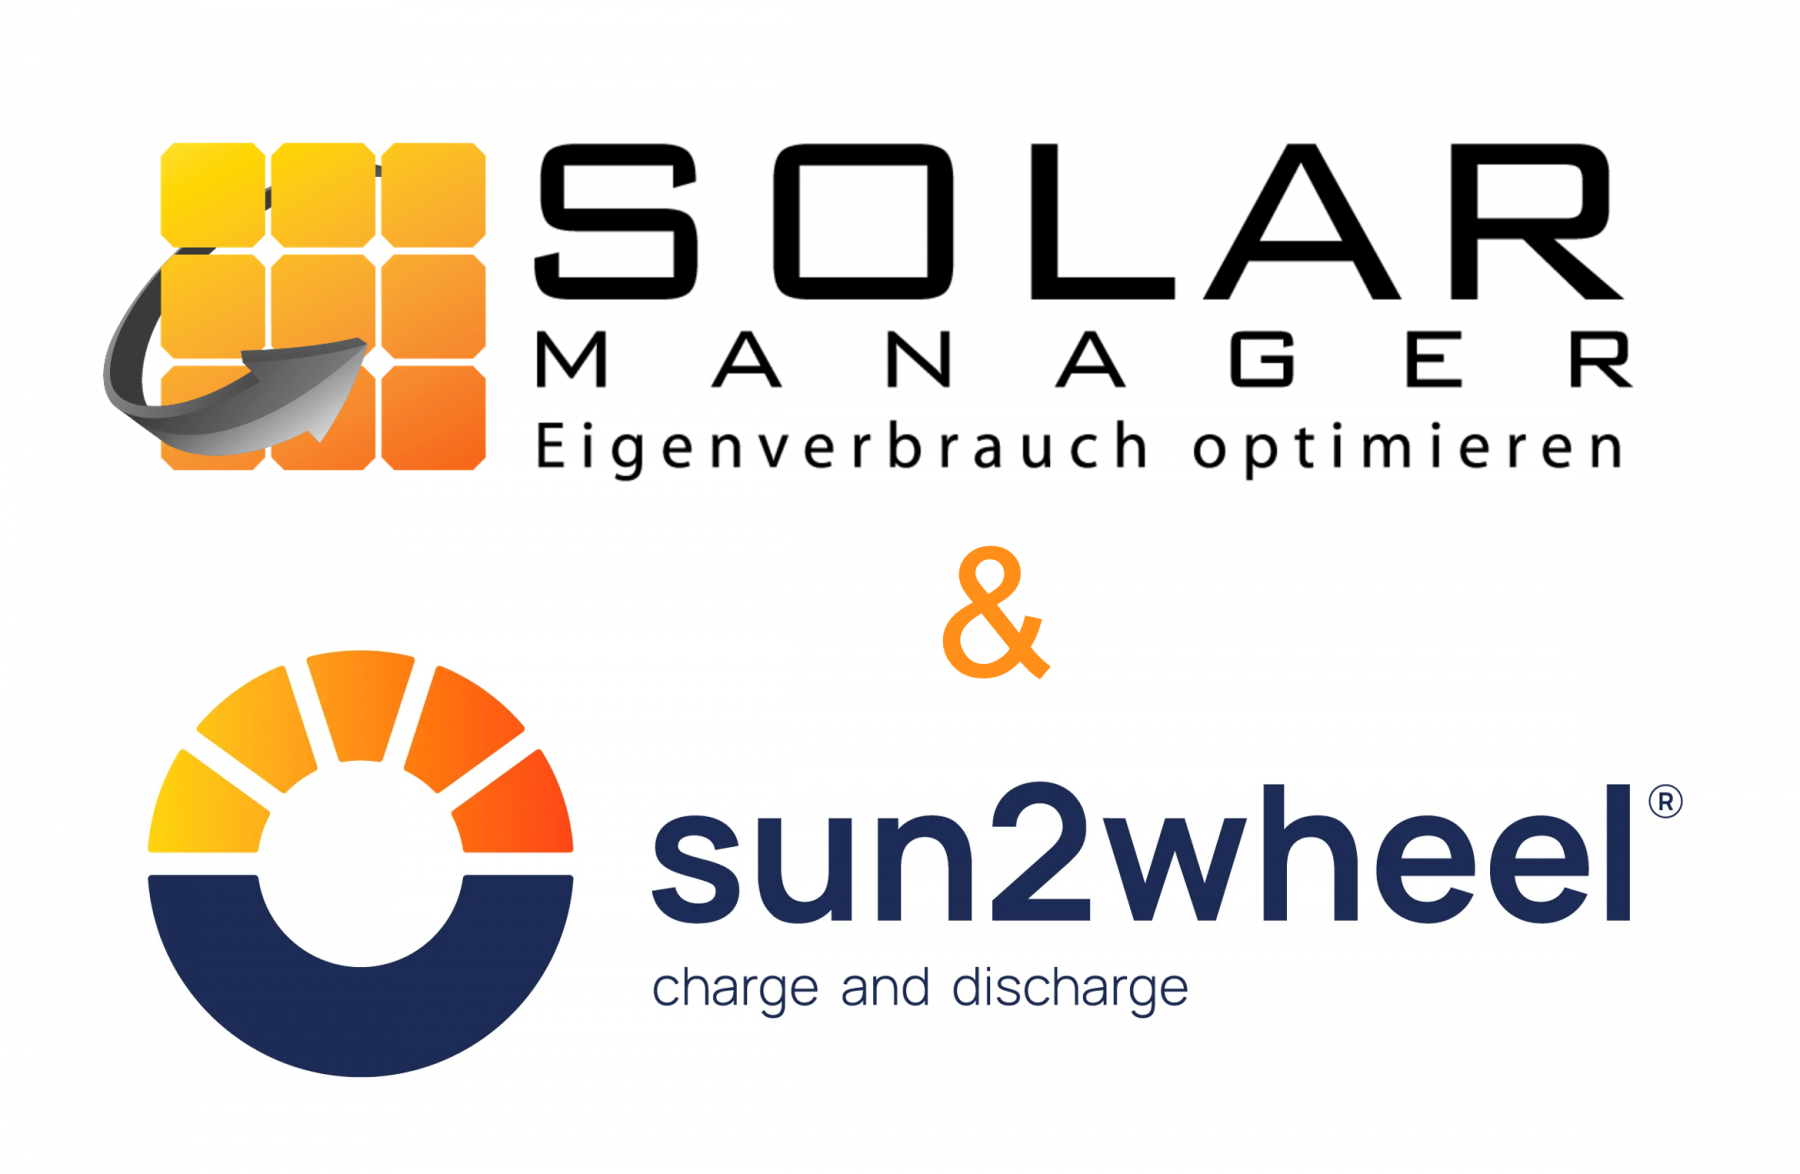 sun2wheel | New partnership with Solar Manager